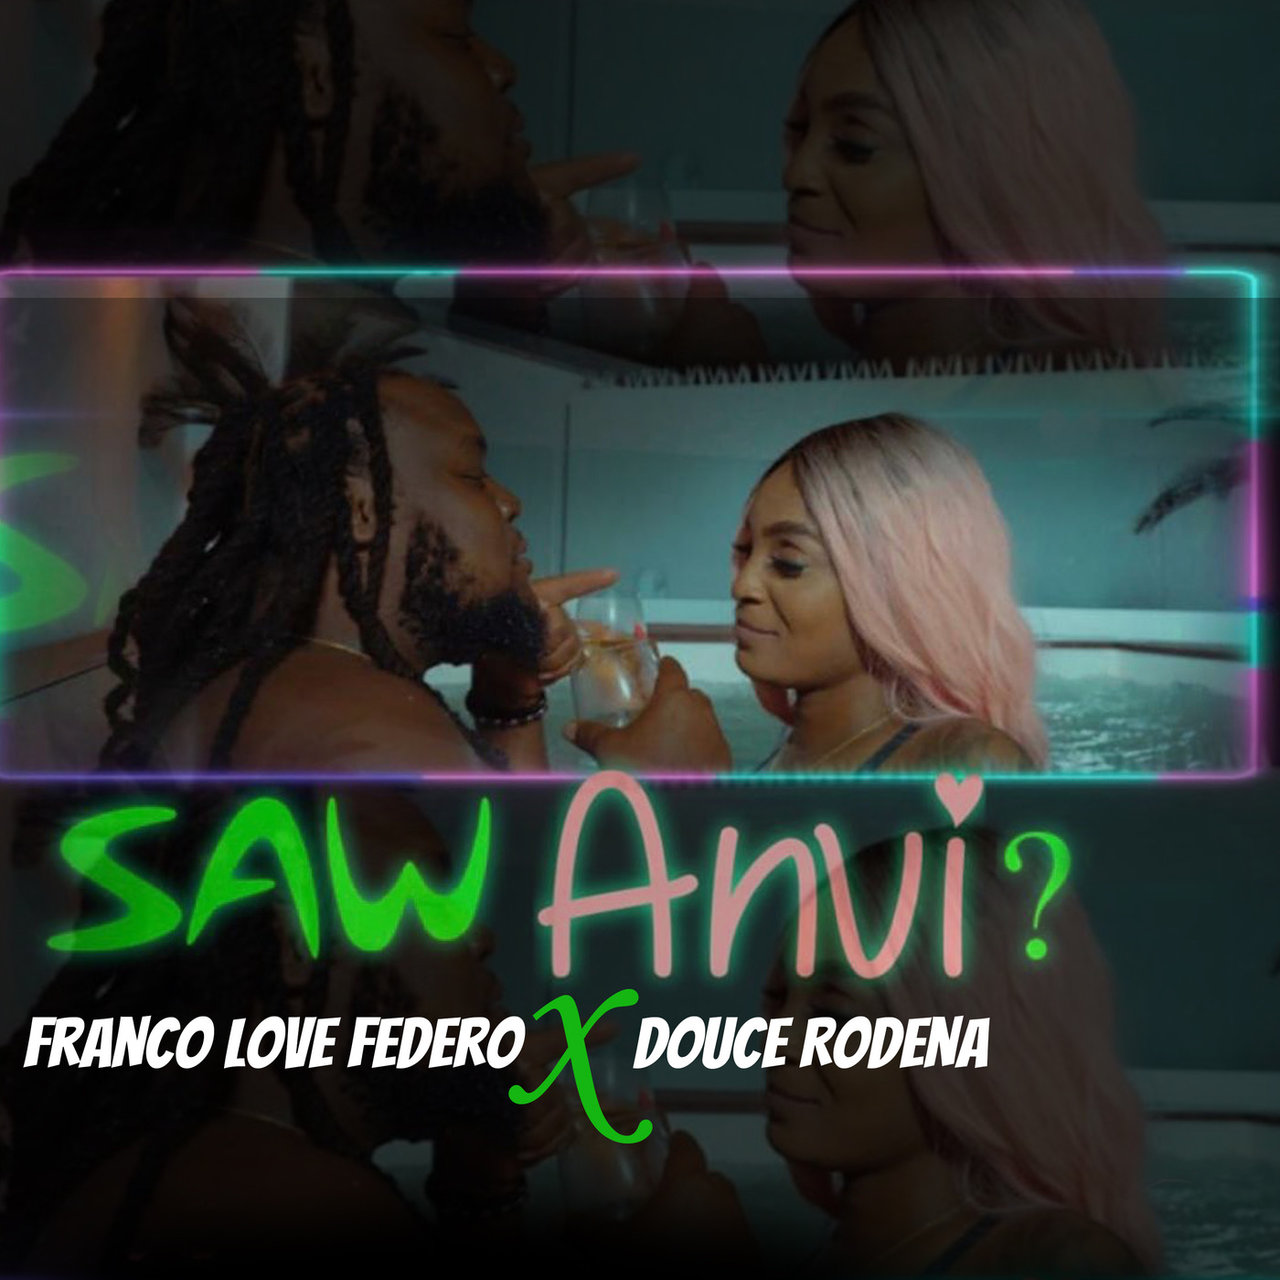 Franco Love Federo - Saw Anvi? (ft. Douce Rodena) (Cover)